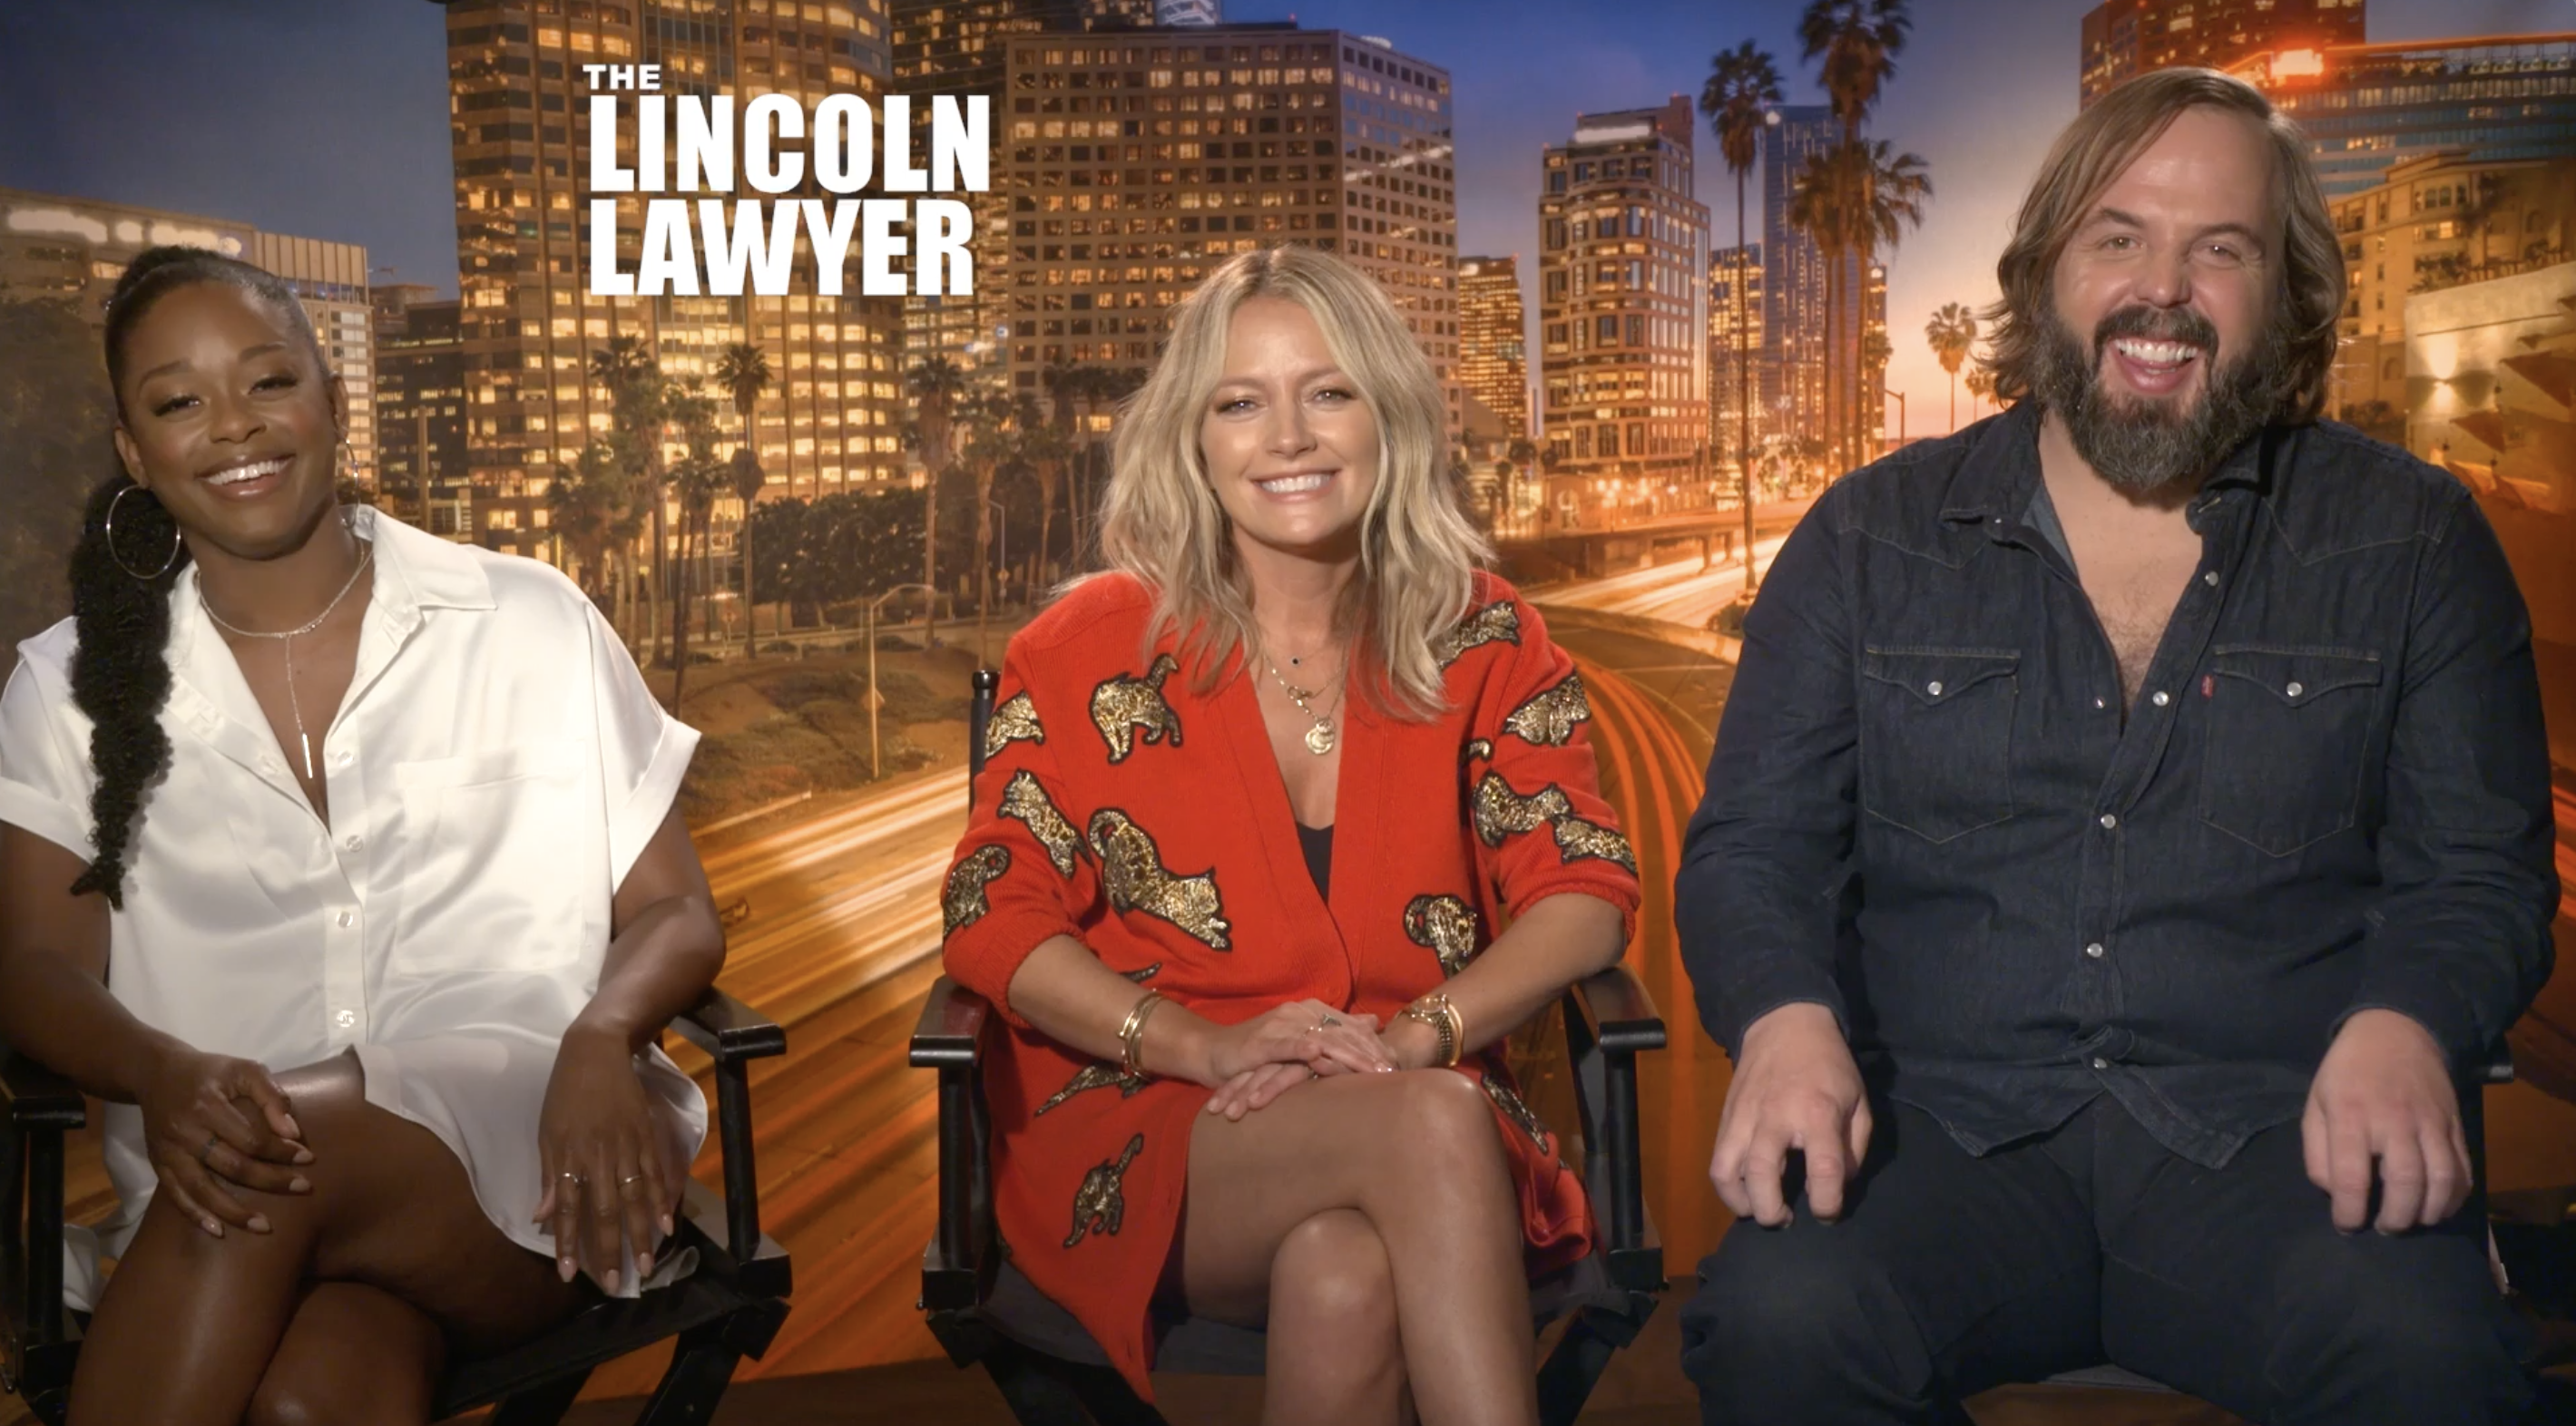 The Lincoln lawyer interviews Becki Newton Jazz Raycole & Angus Sampson